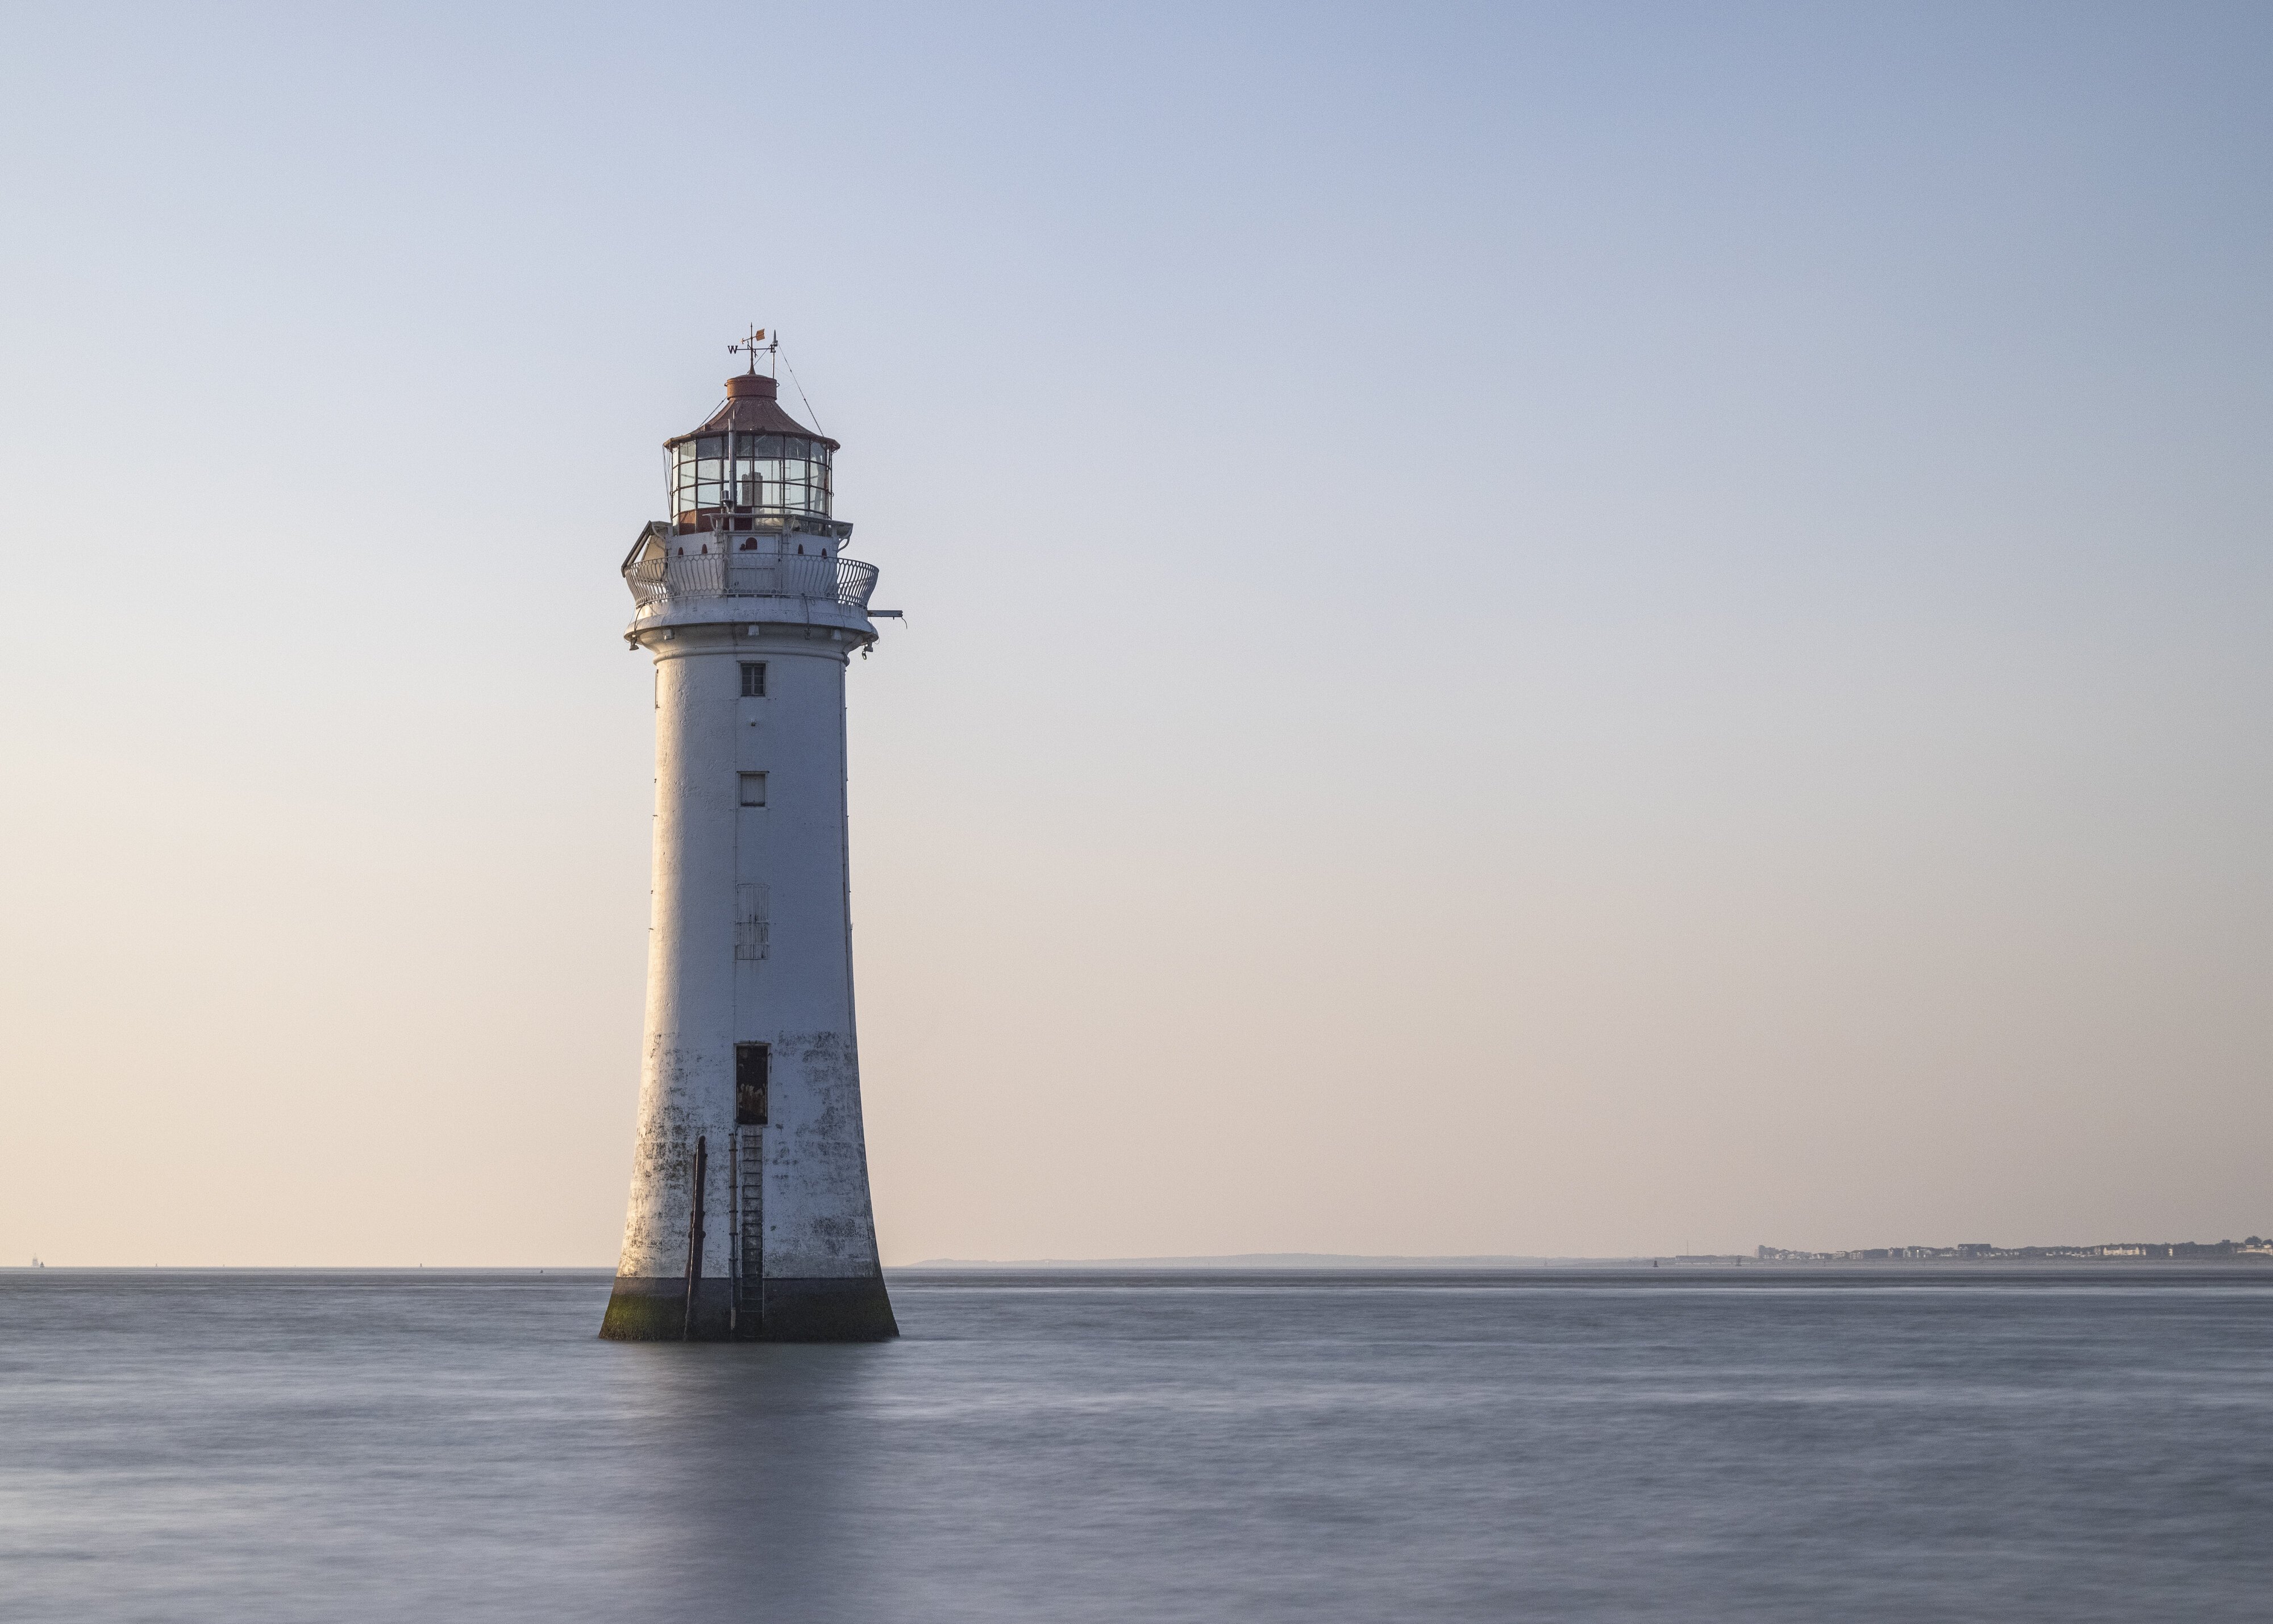 New Brighton Lighthouse - River Mersey, Liverpool, UK